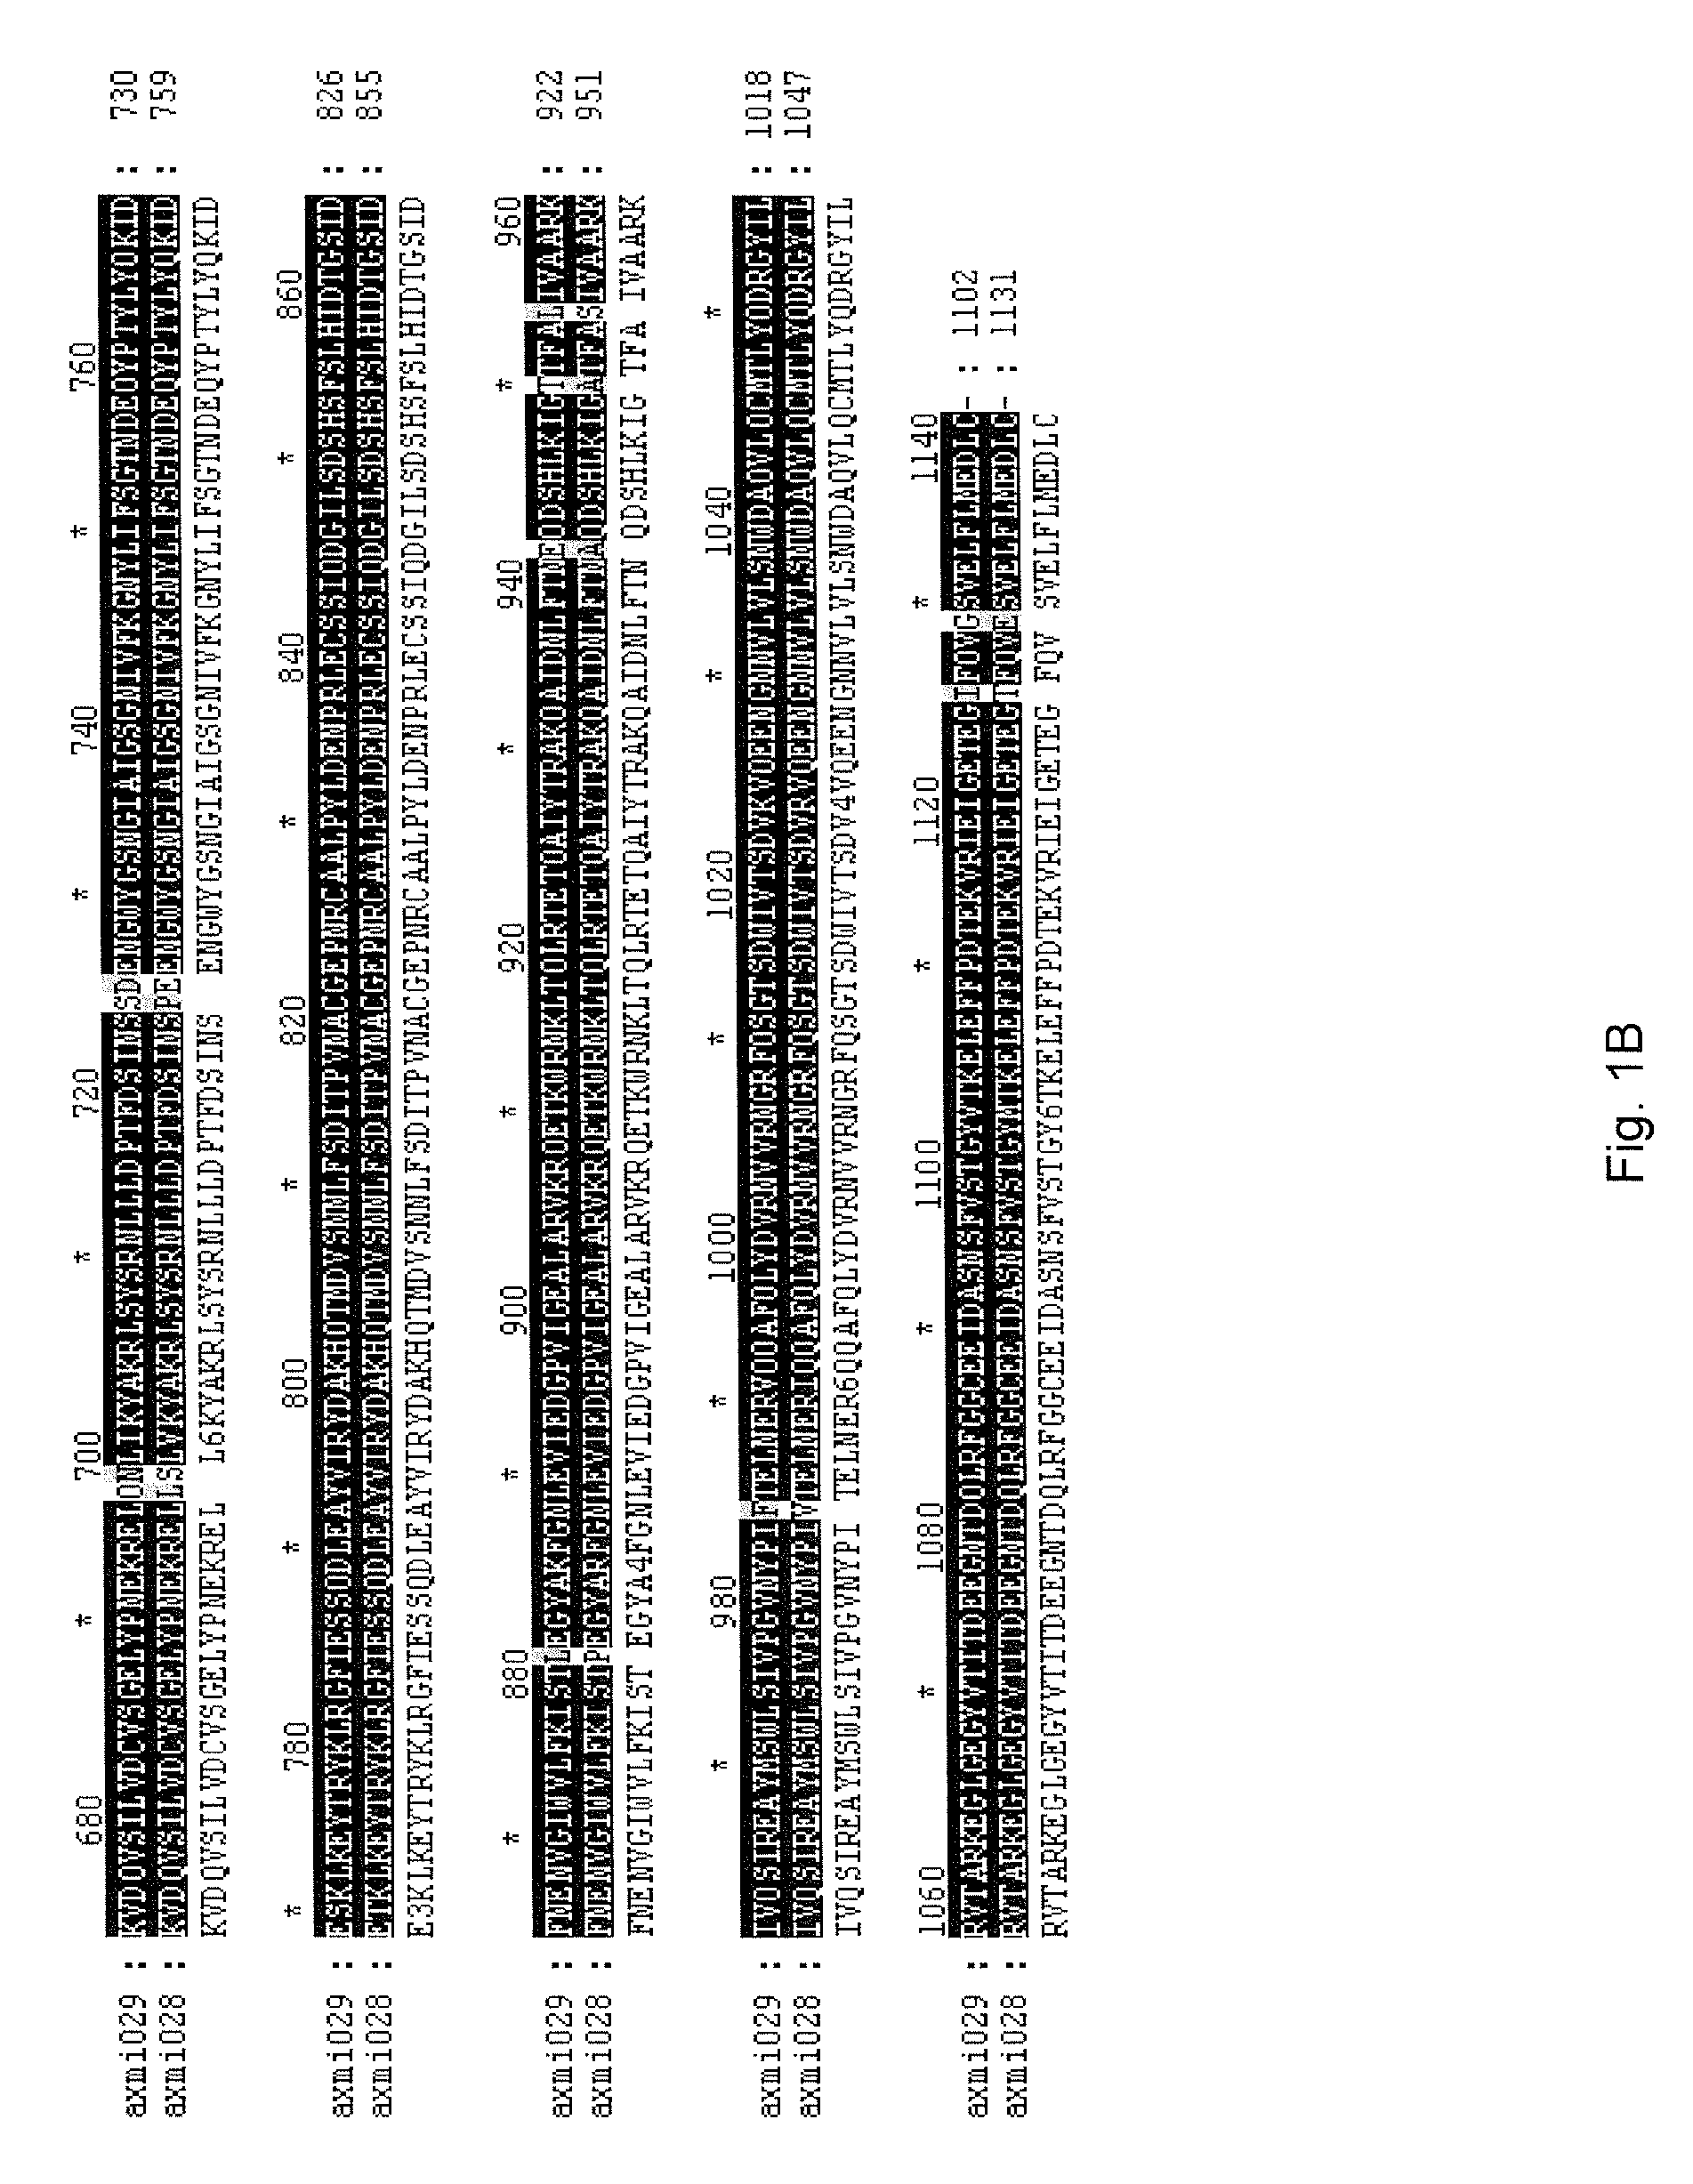 Axmi-028 and axmi-029, a family of novel delta-endotoxin genes and methods for their use